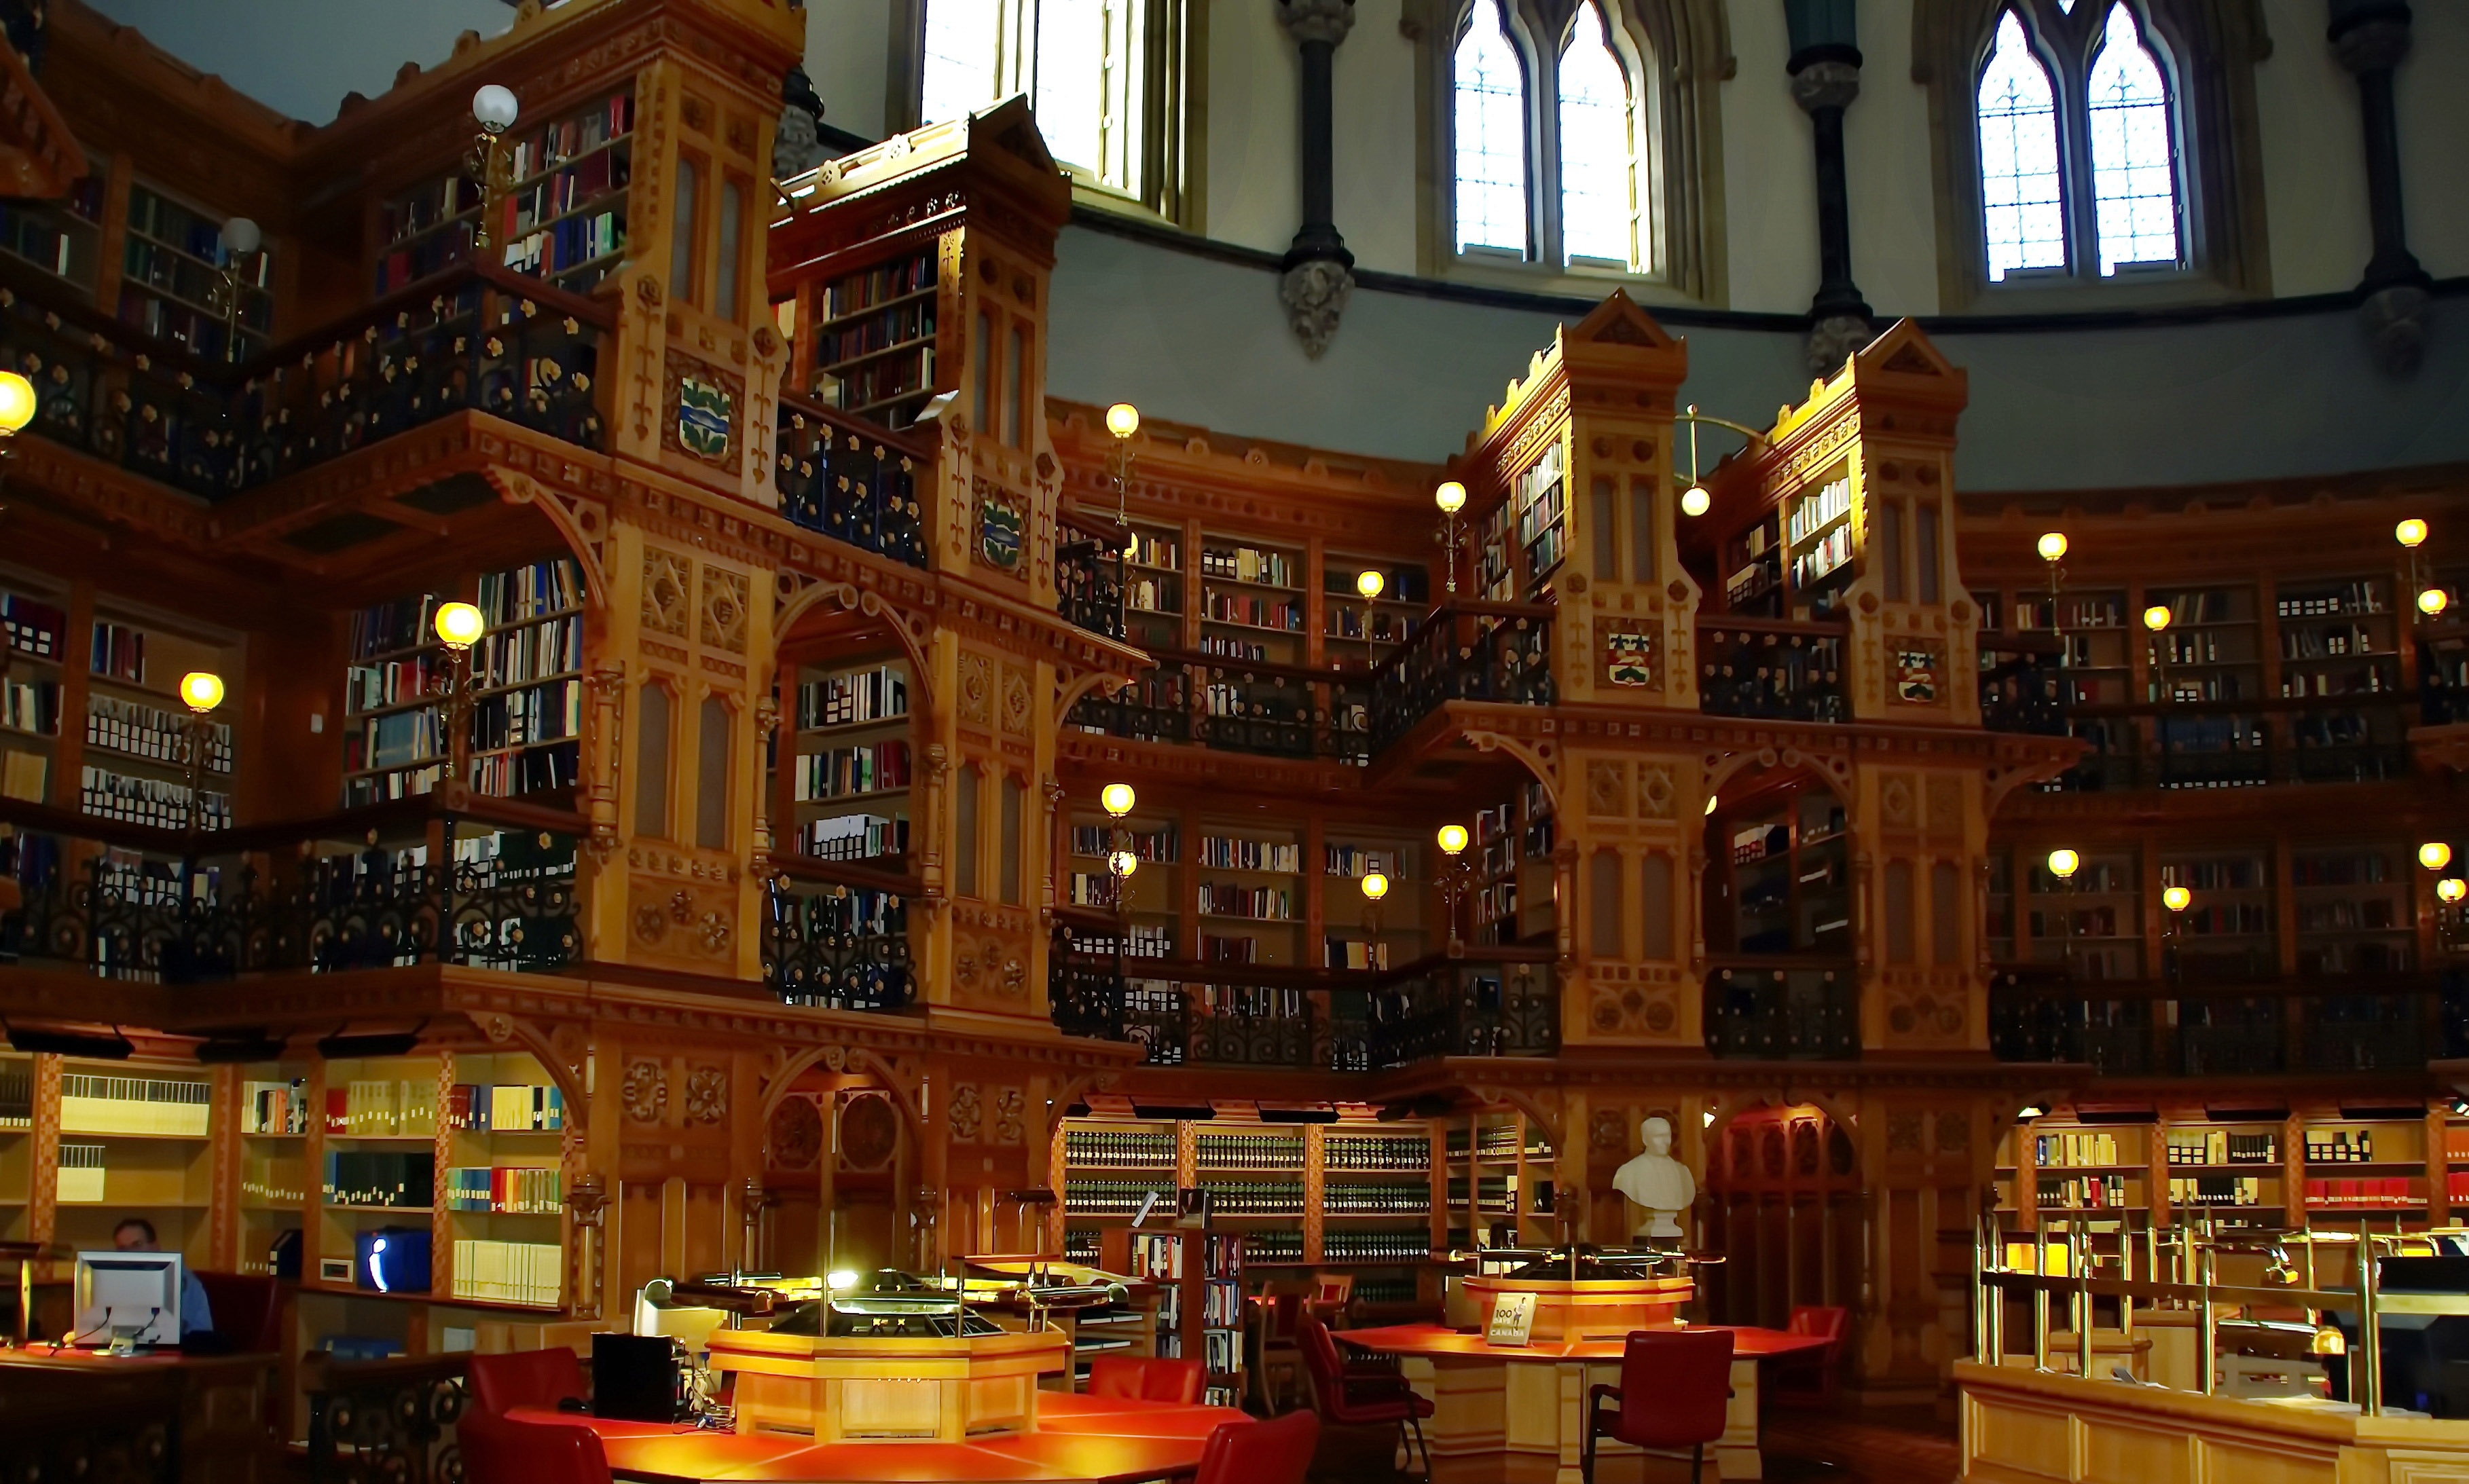 Library of Congress in Ottawa, Ontario, Canada image  Free stock photo